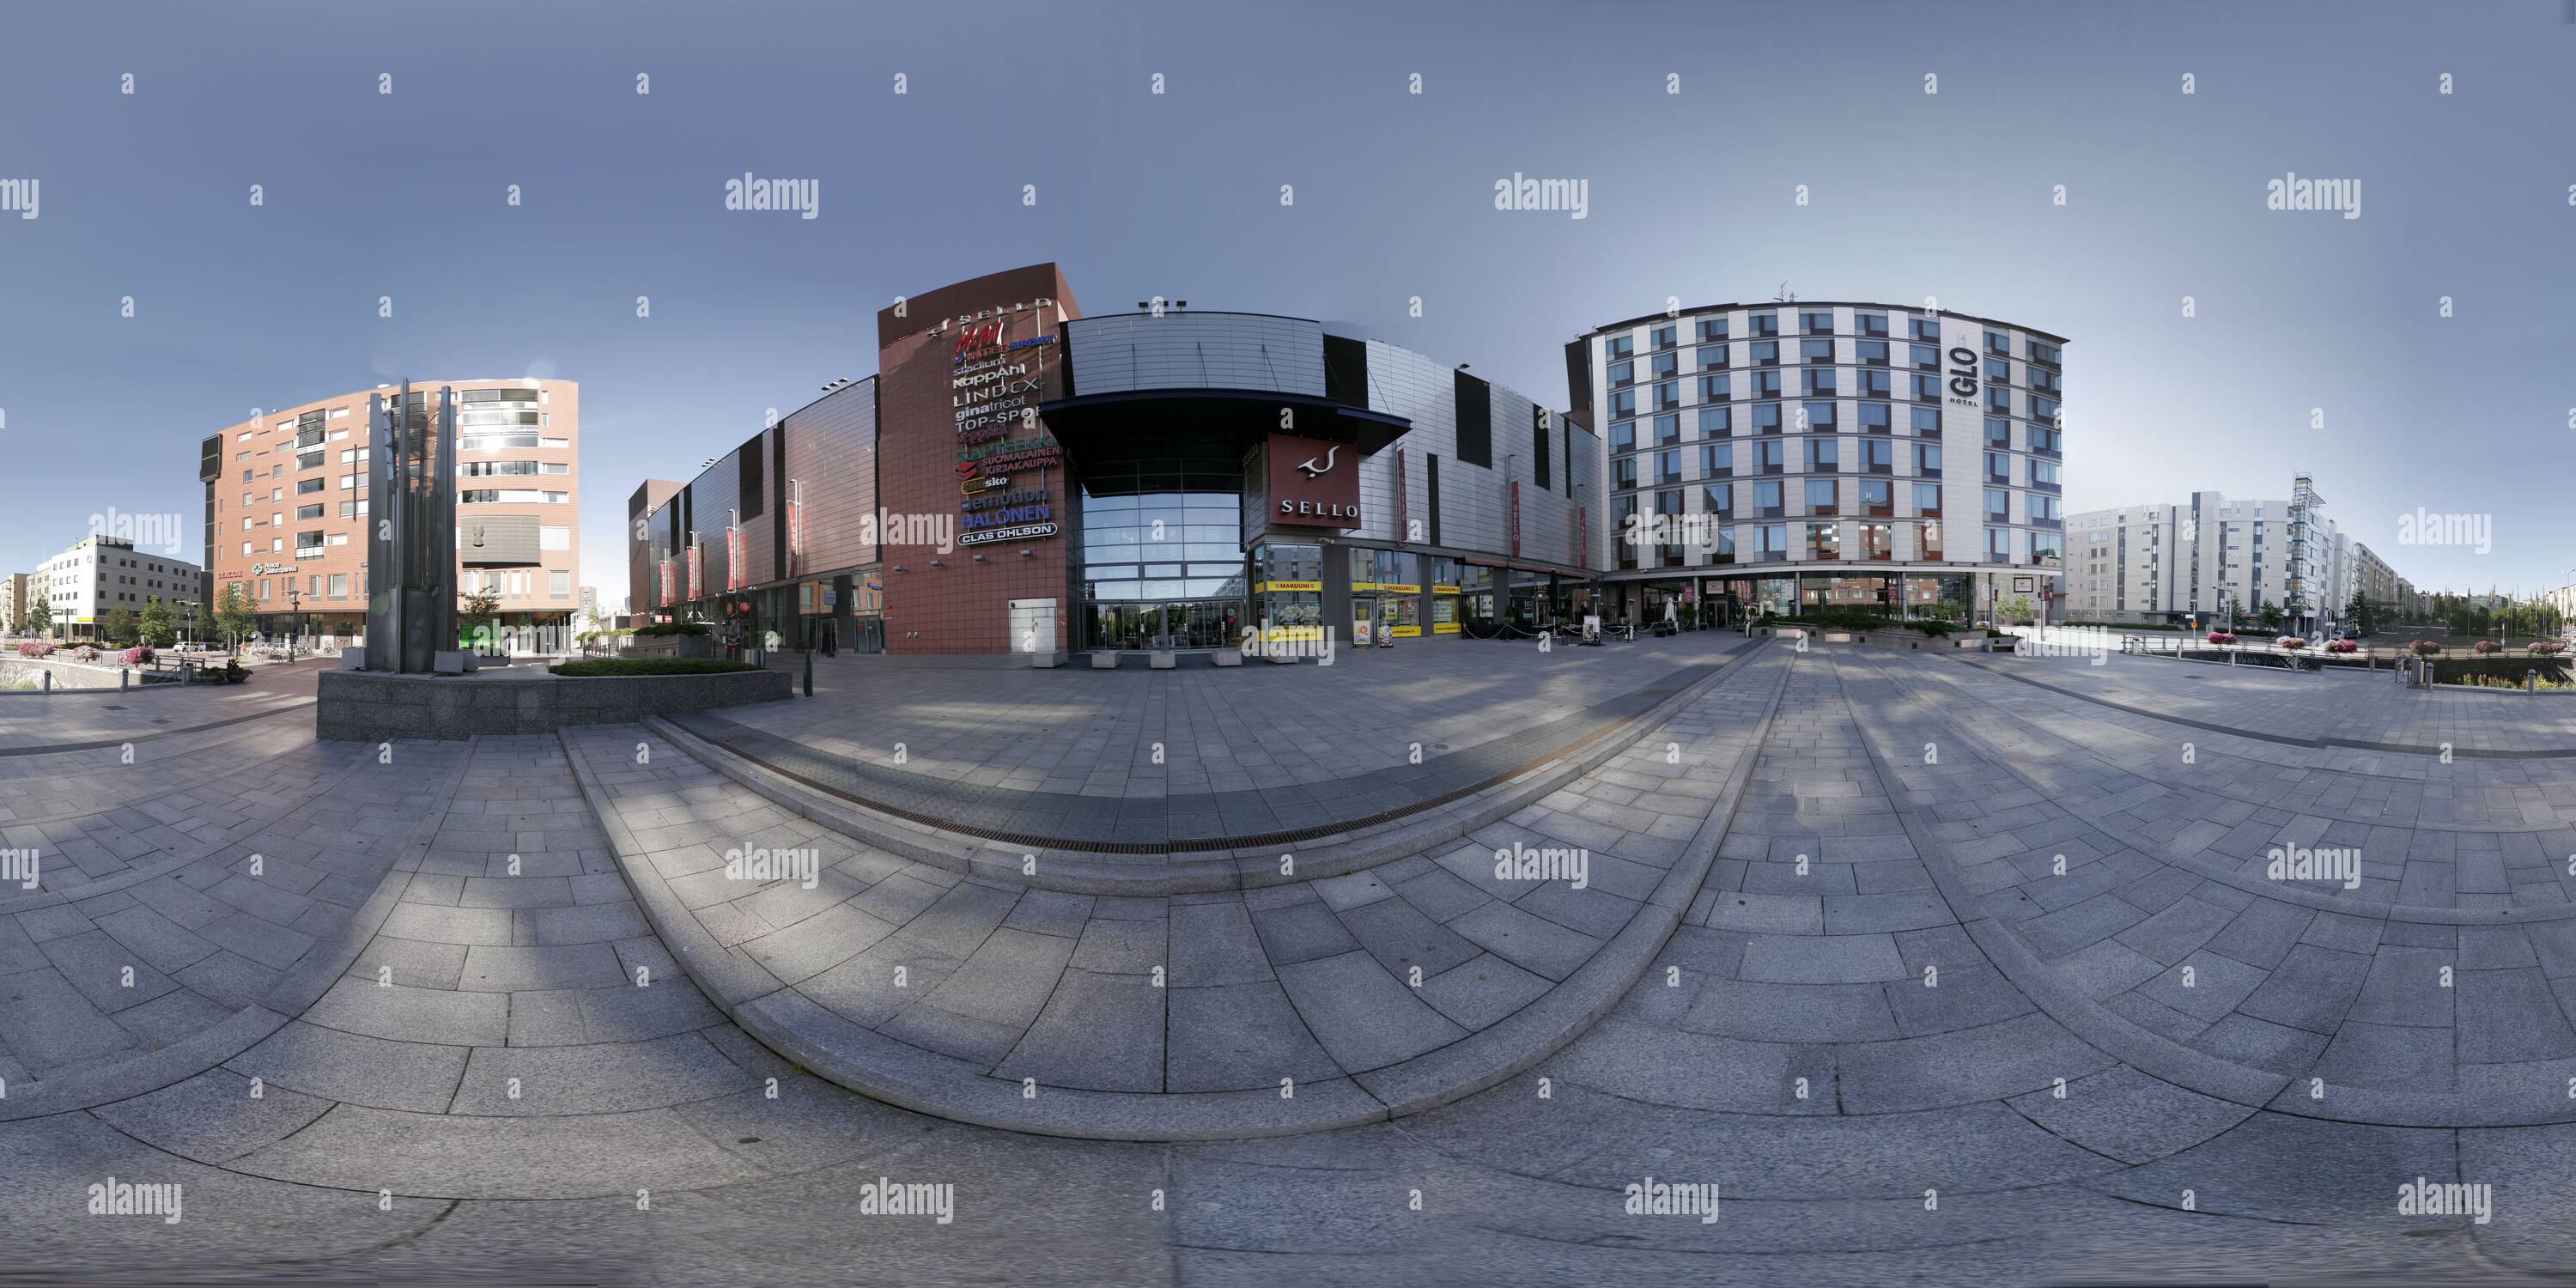 360-view-of-shopping-mall-sello-in-espoo-lepp-vaara-finland-alamy